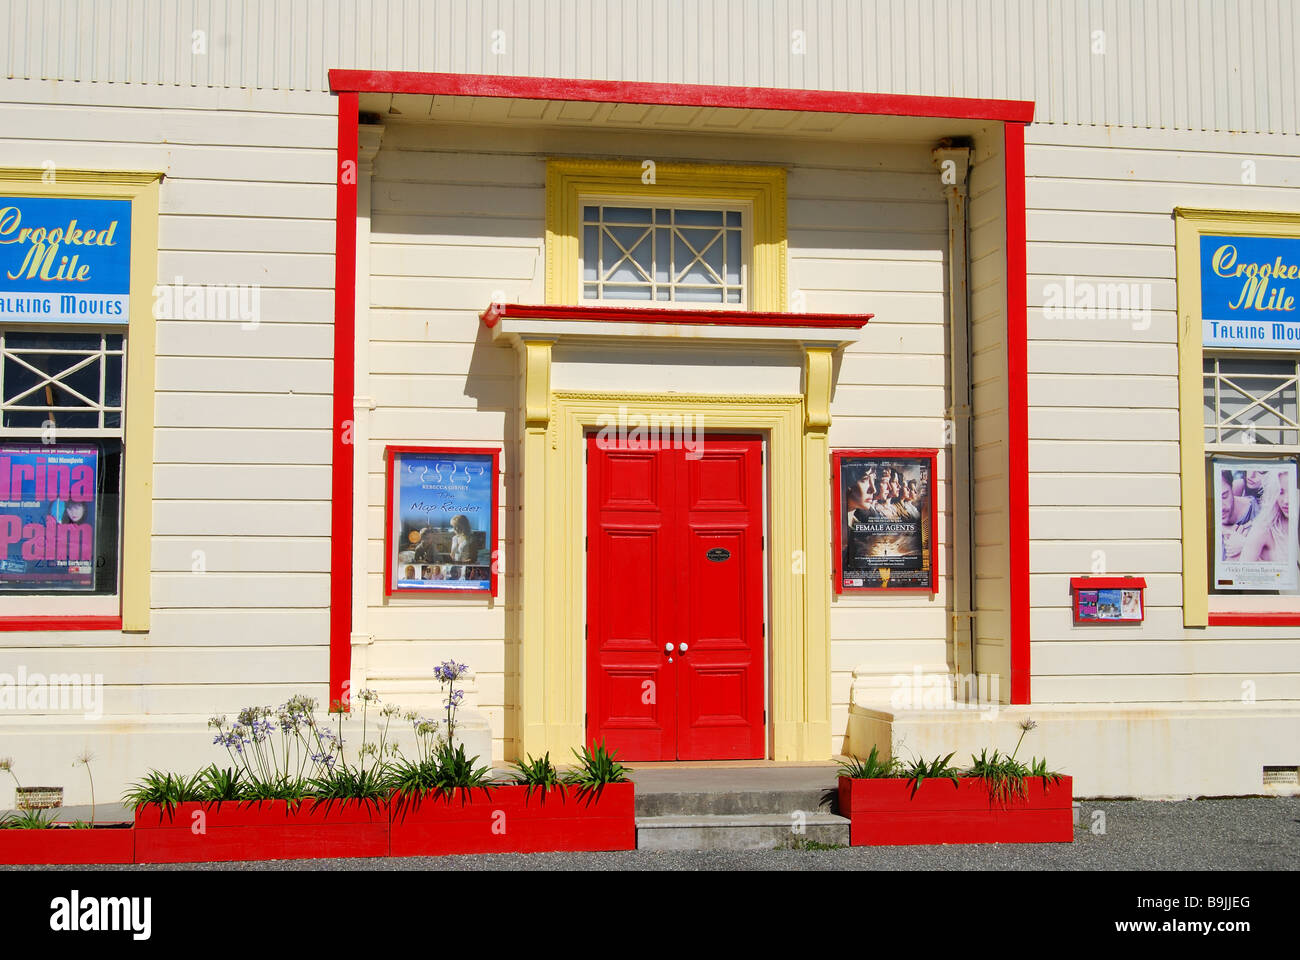 Crooked Mile Talking Movies building, Revell Street, Hokitika, Westland District, West Coast, South Island, New Zealand Stock Photo